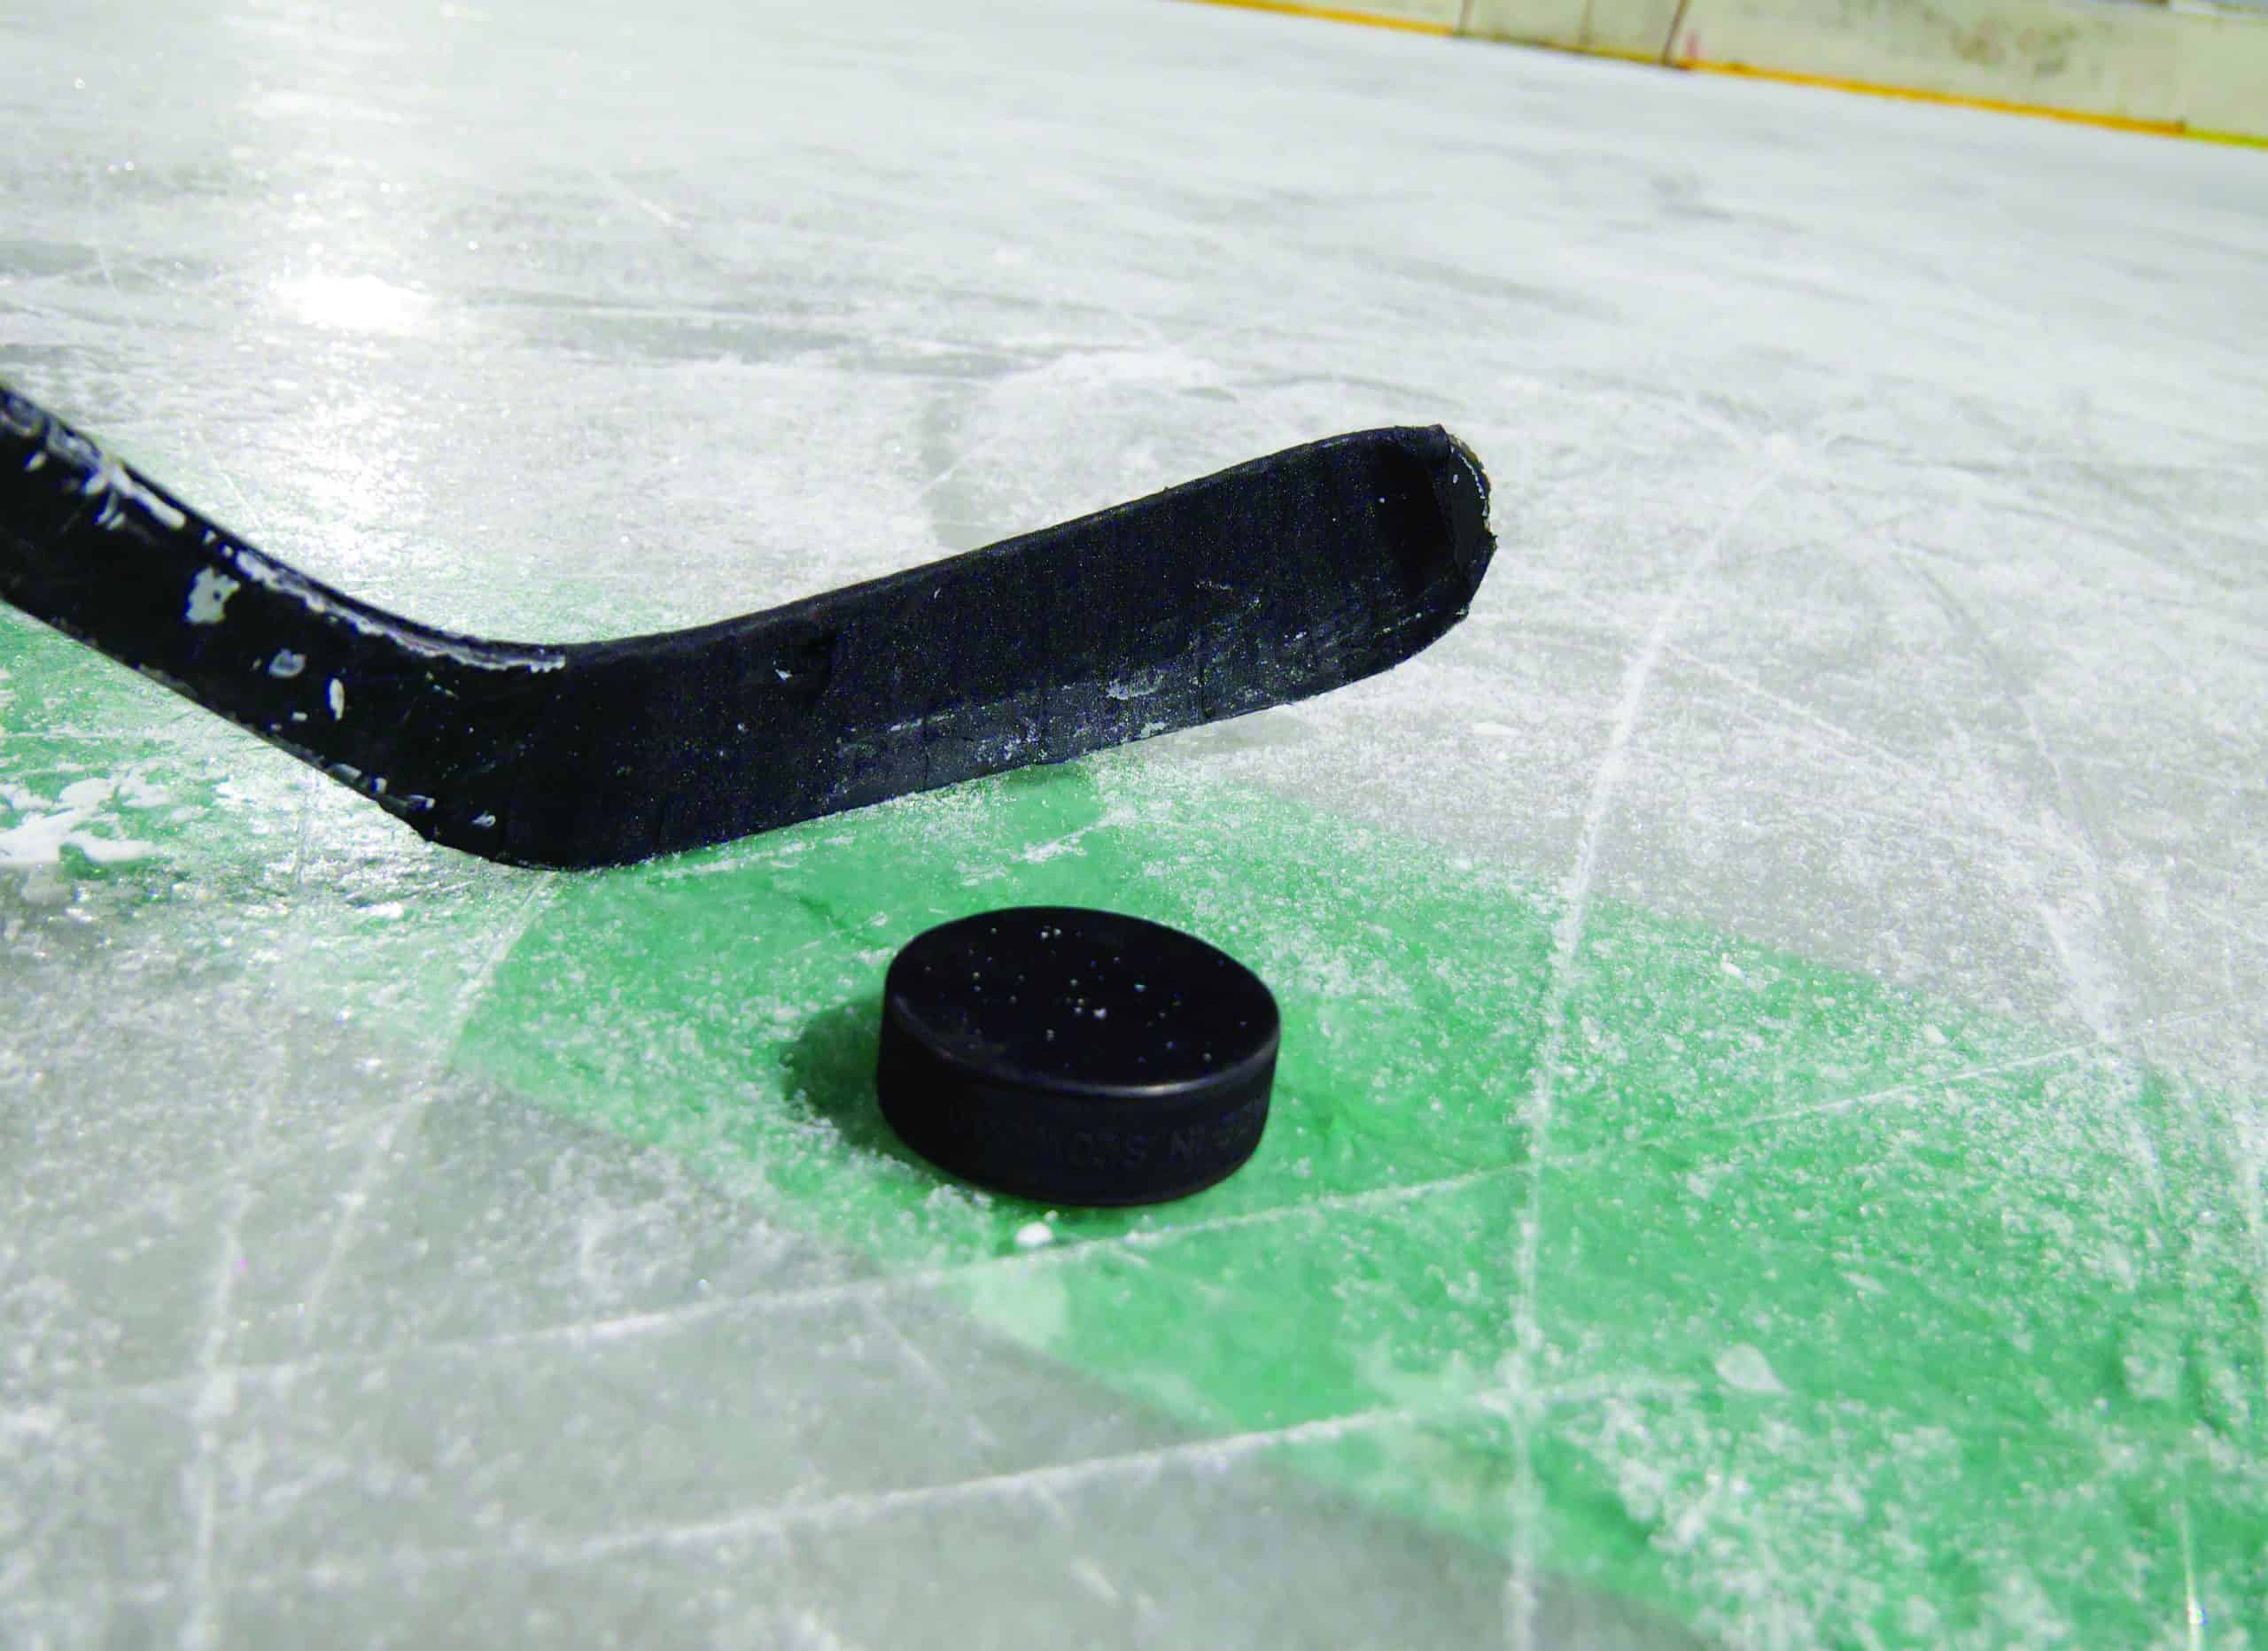 Vancouver Canucks (WHL), Ice Hockey Wiki